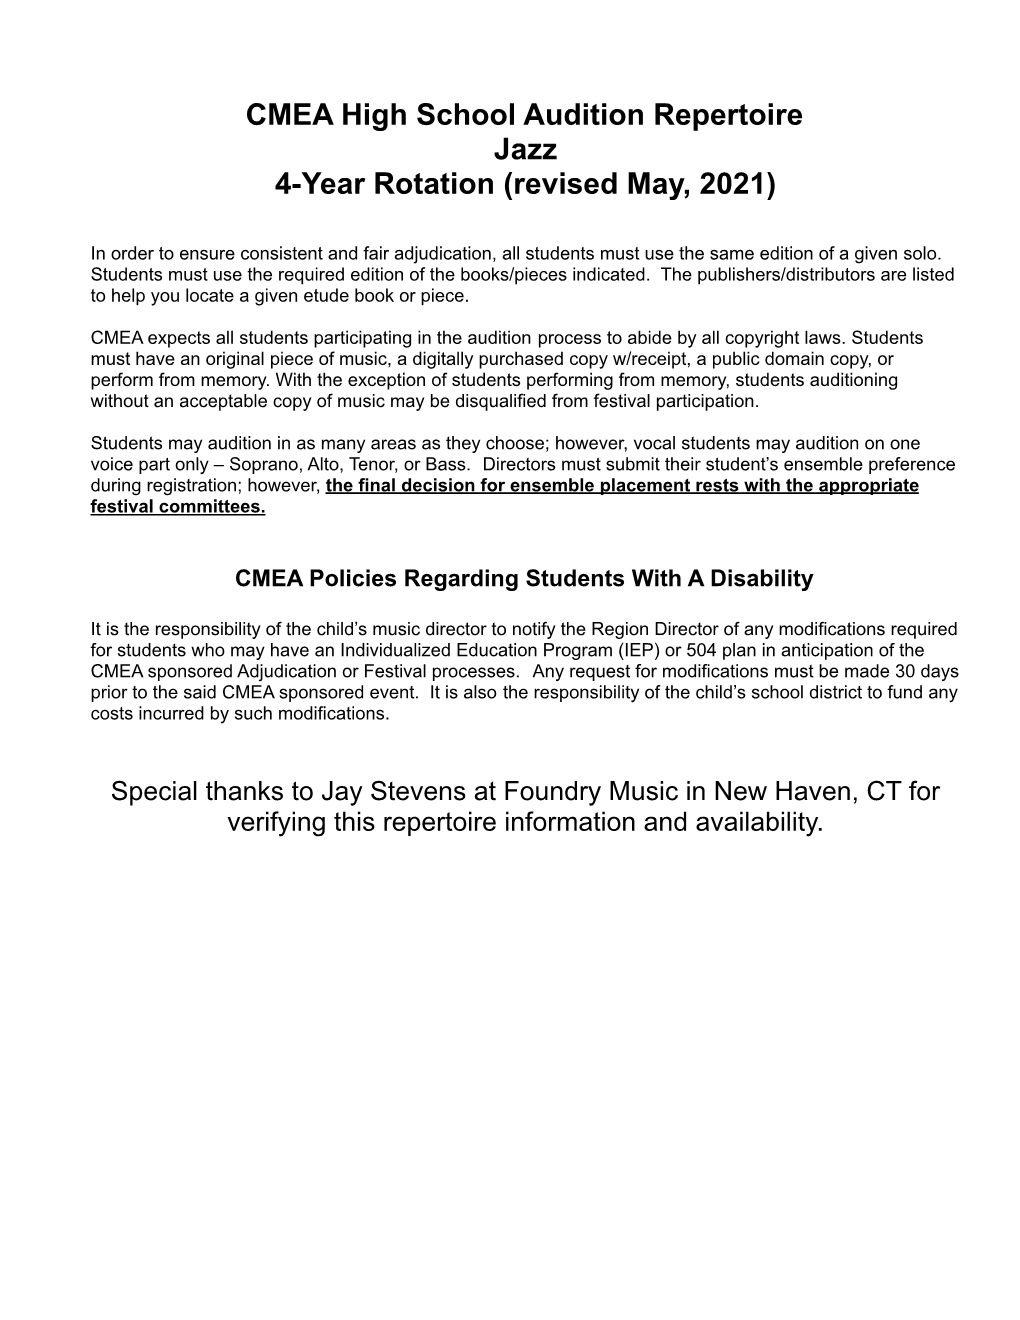 CMEA HS Jazz Auditionrepertoire 2021-2024.Docx